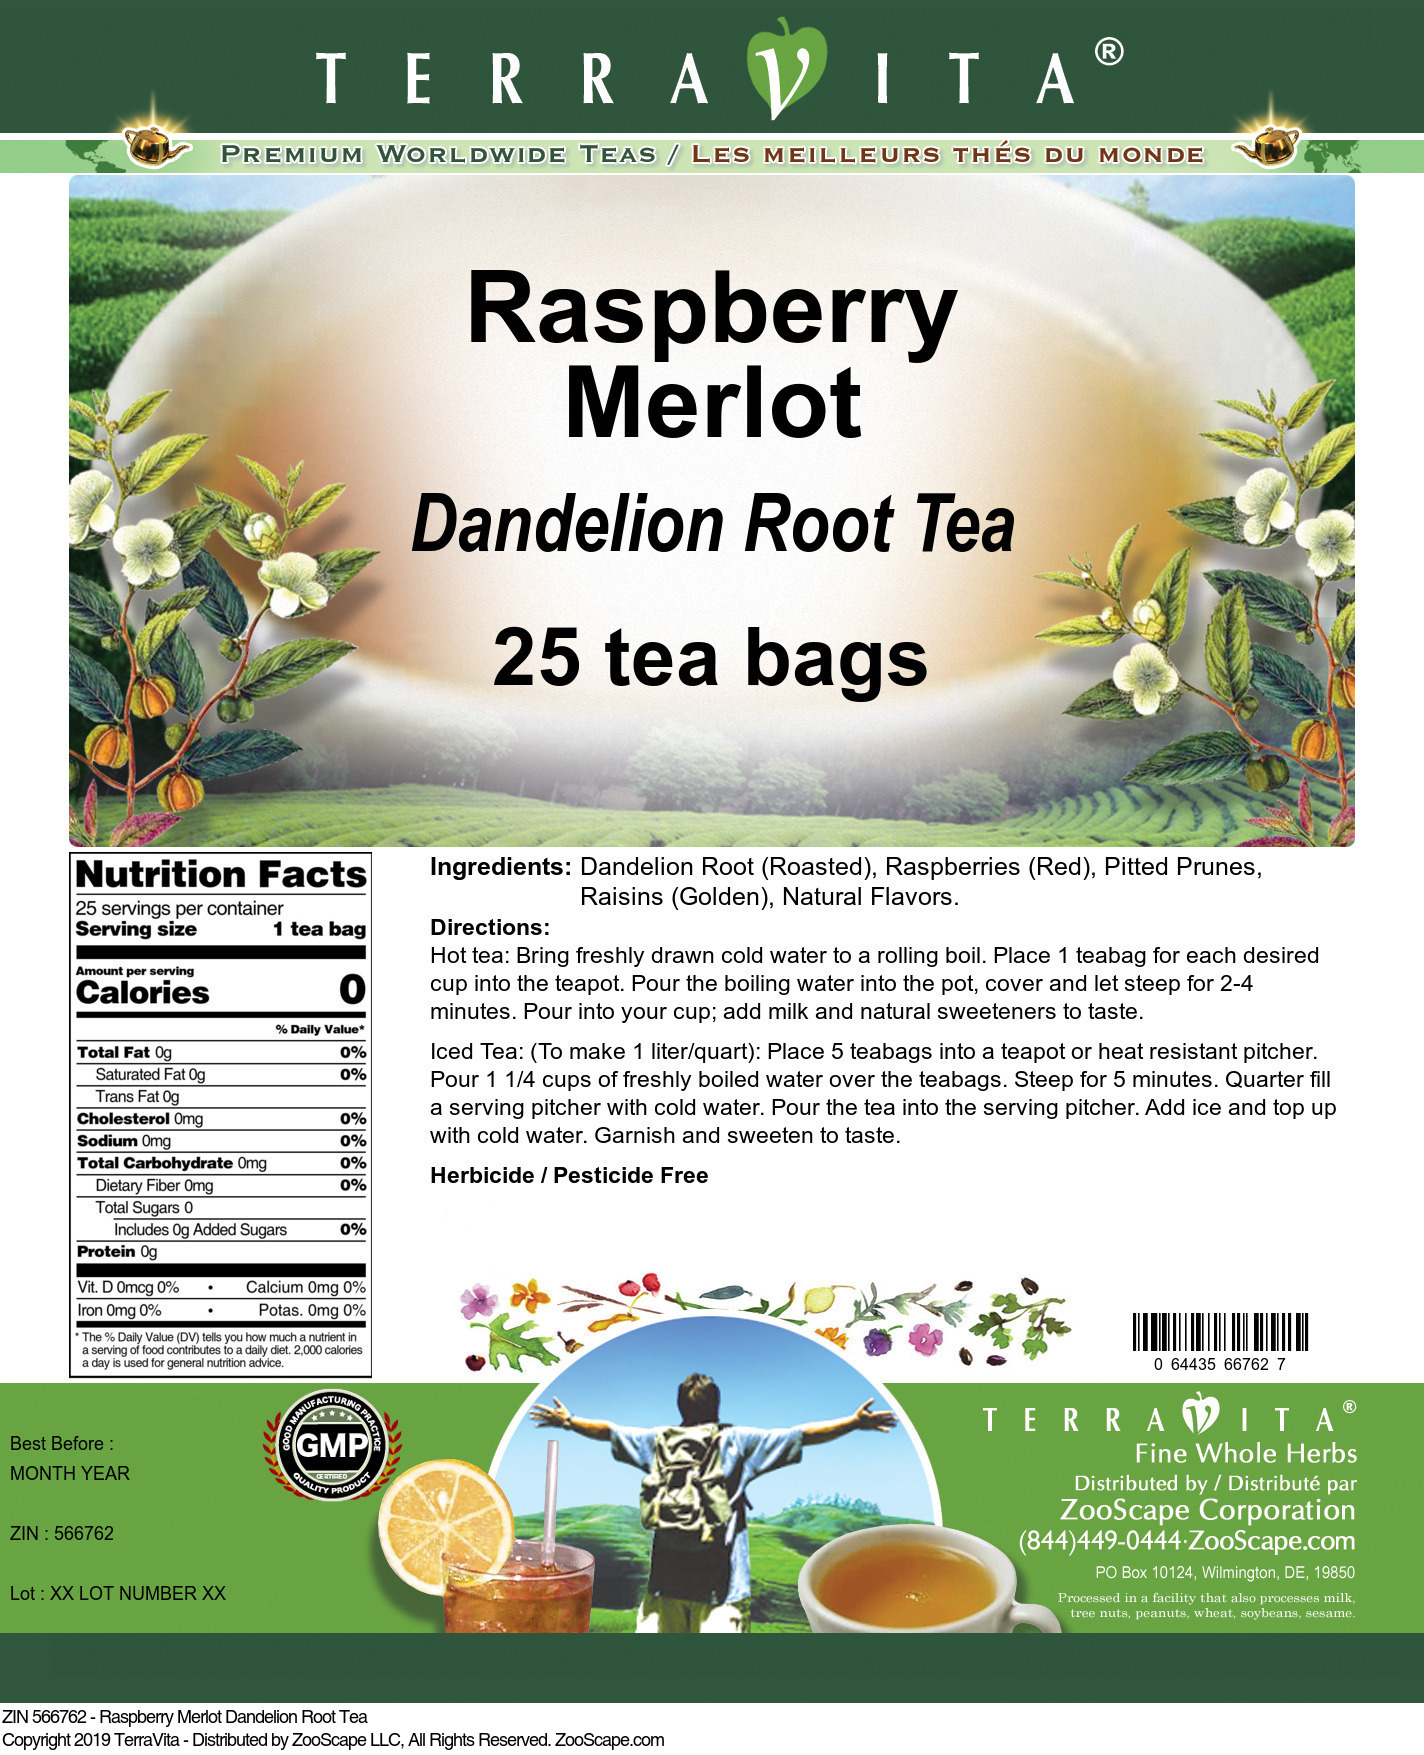 Raspberry Merlot Dandelion Root Tea - Label